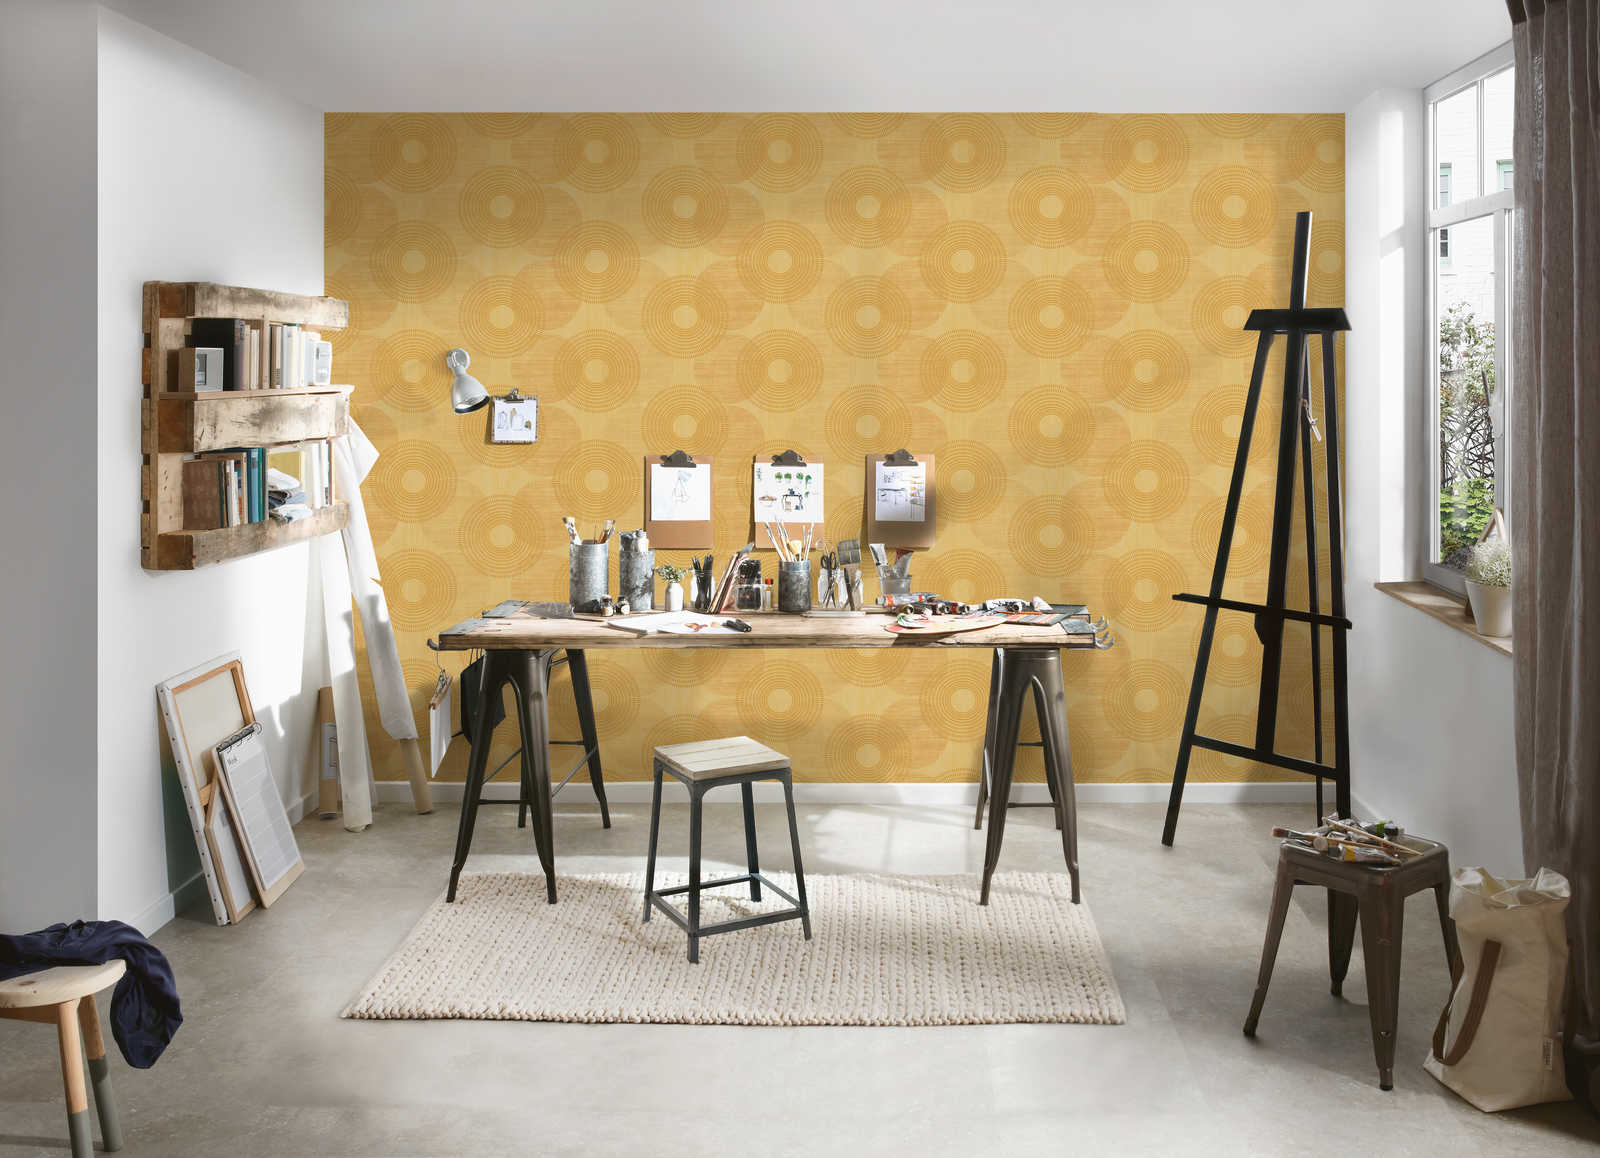             Scandinavian style wallpaper with modern pattern - yellow
        